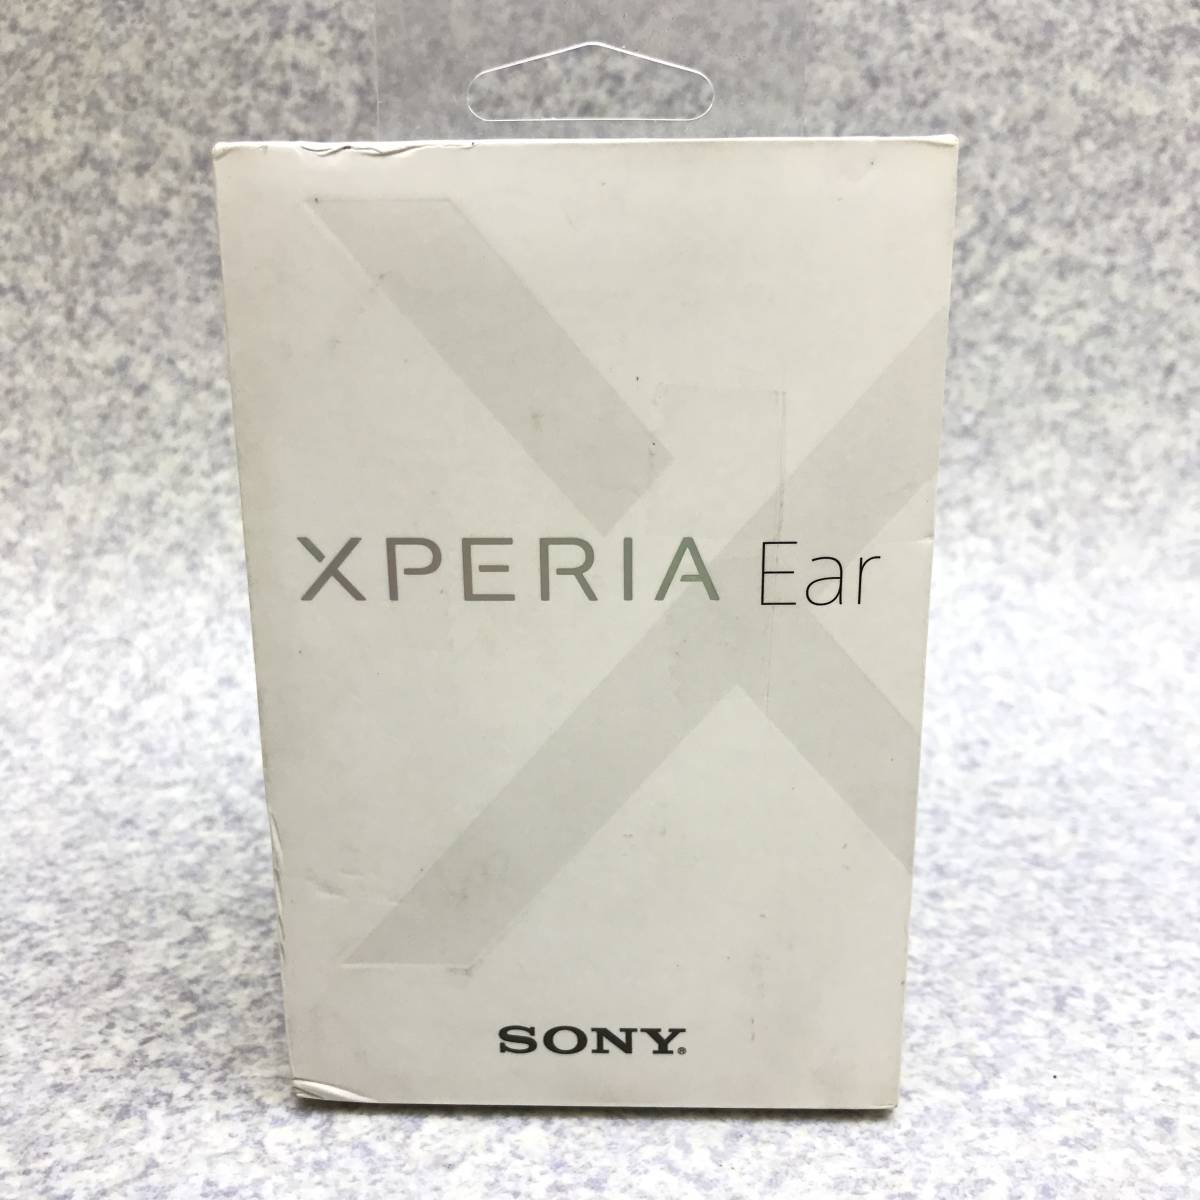 SONY XPERIA Ear XEA10 ボイスアシスタント機能搭載Bluetoothモノラル